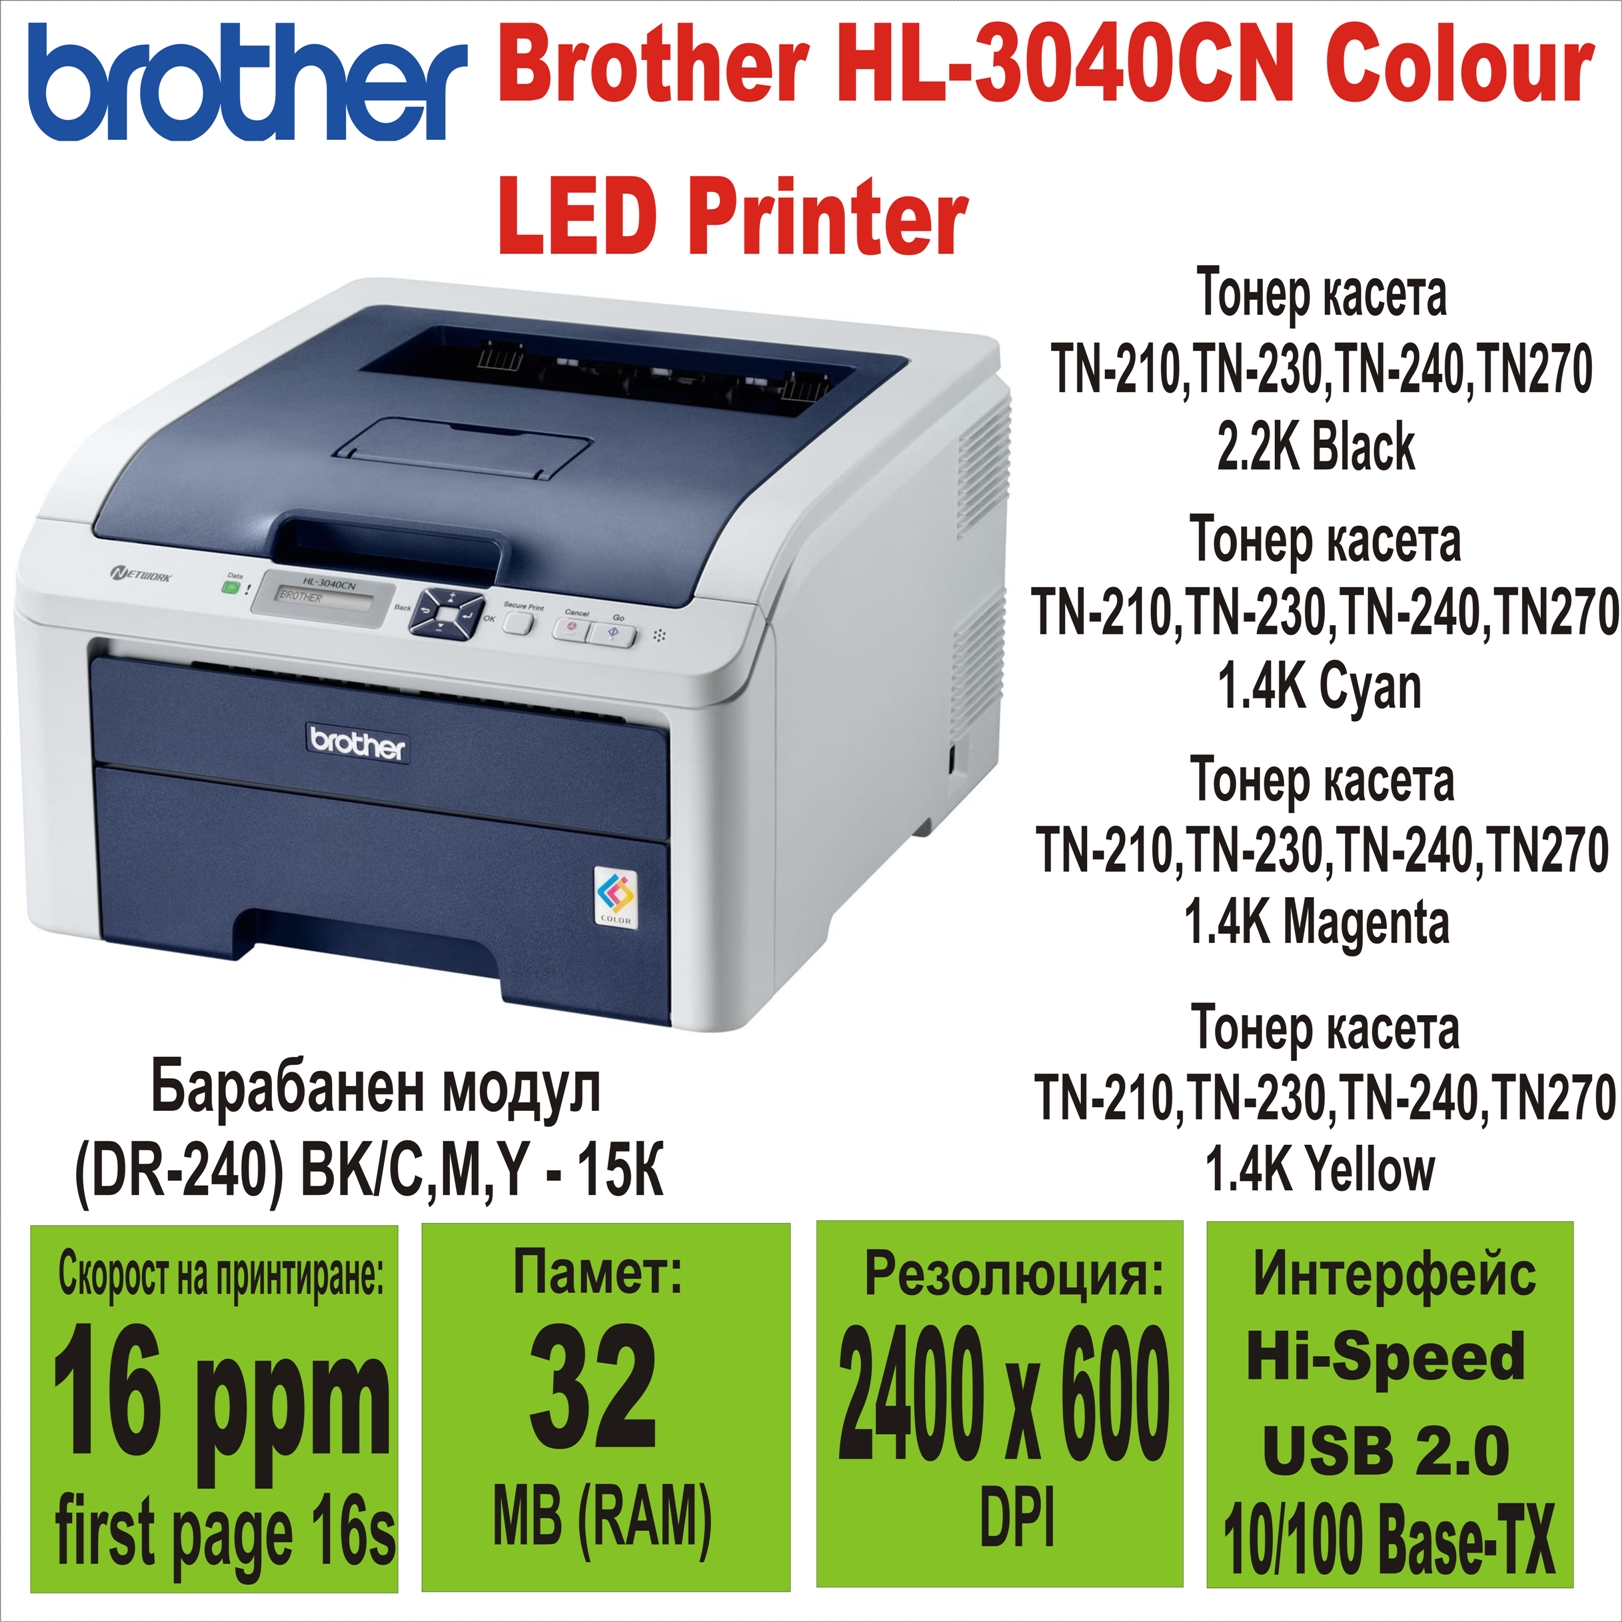 Brother HL 3040CN Colour LED Printer